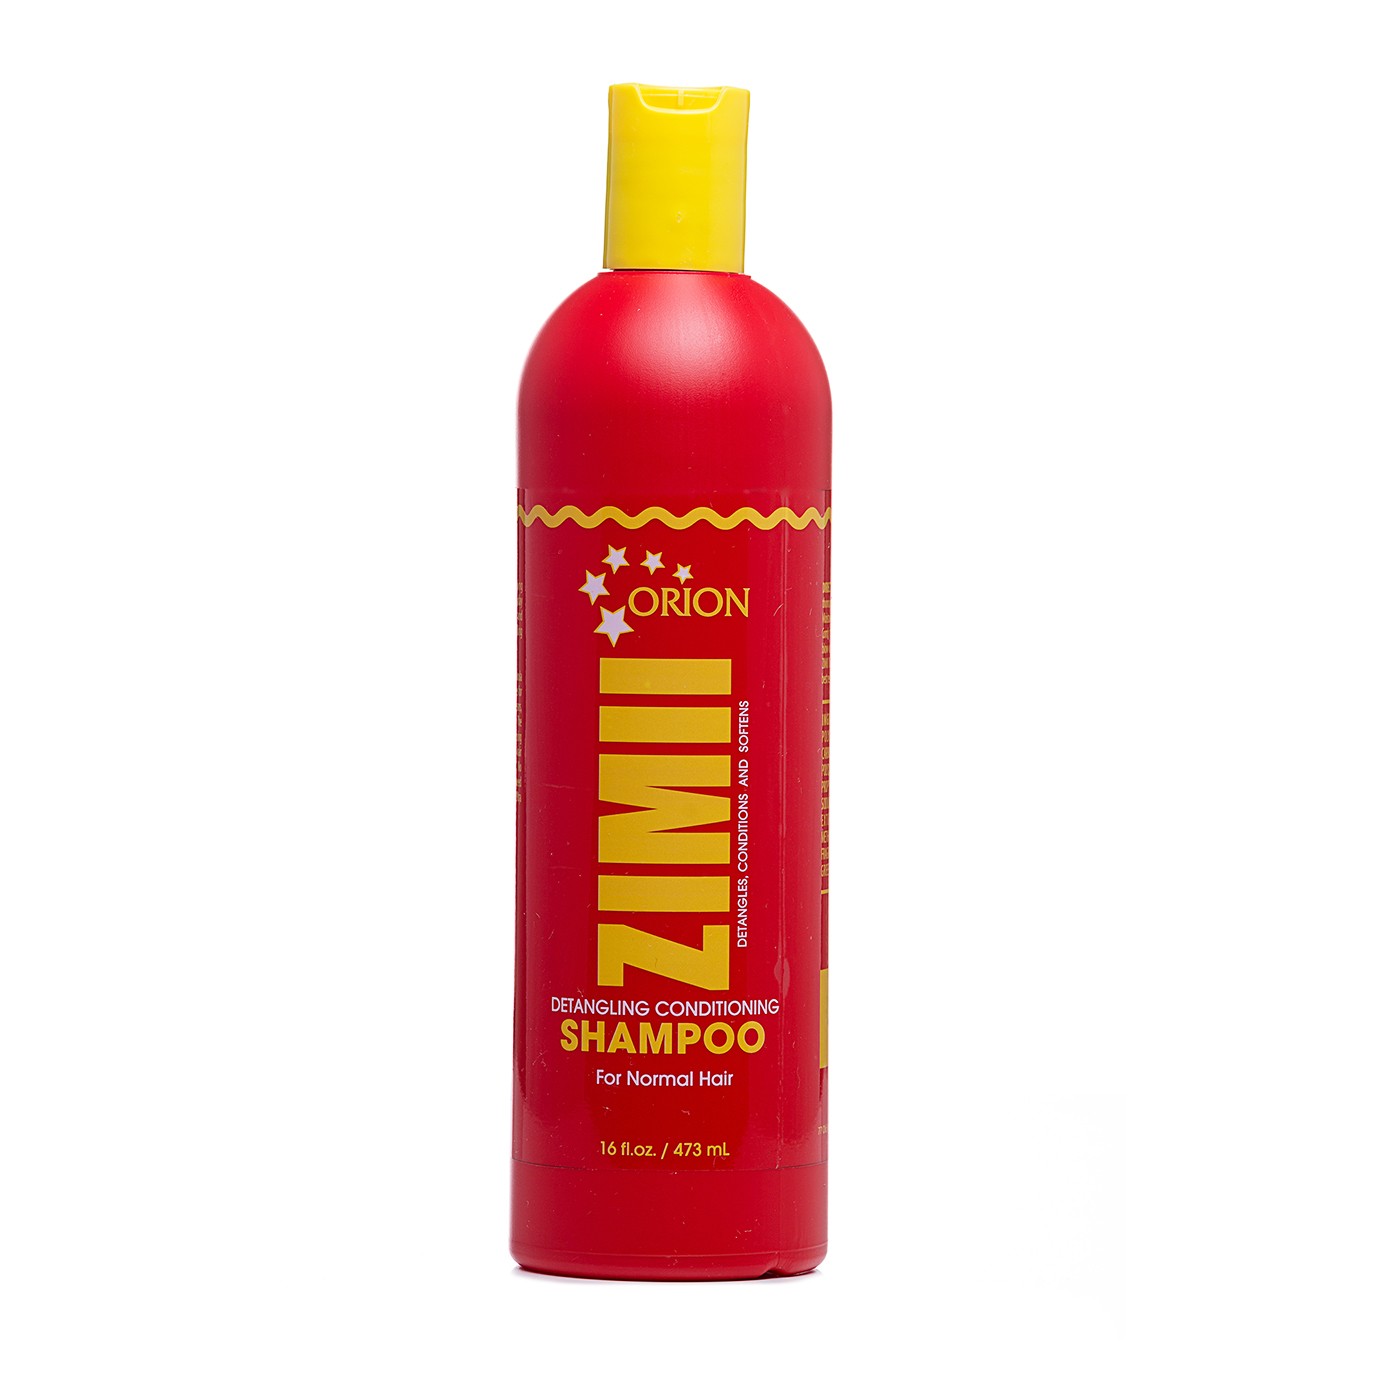 Orion Zimii Detangling Conditioning Shampoo 16 Oz.